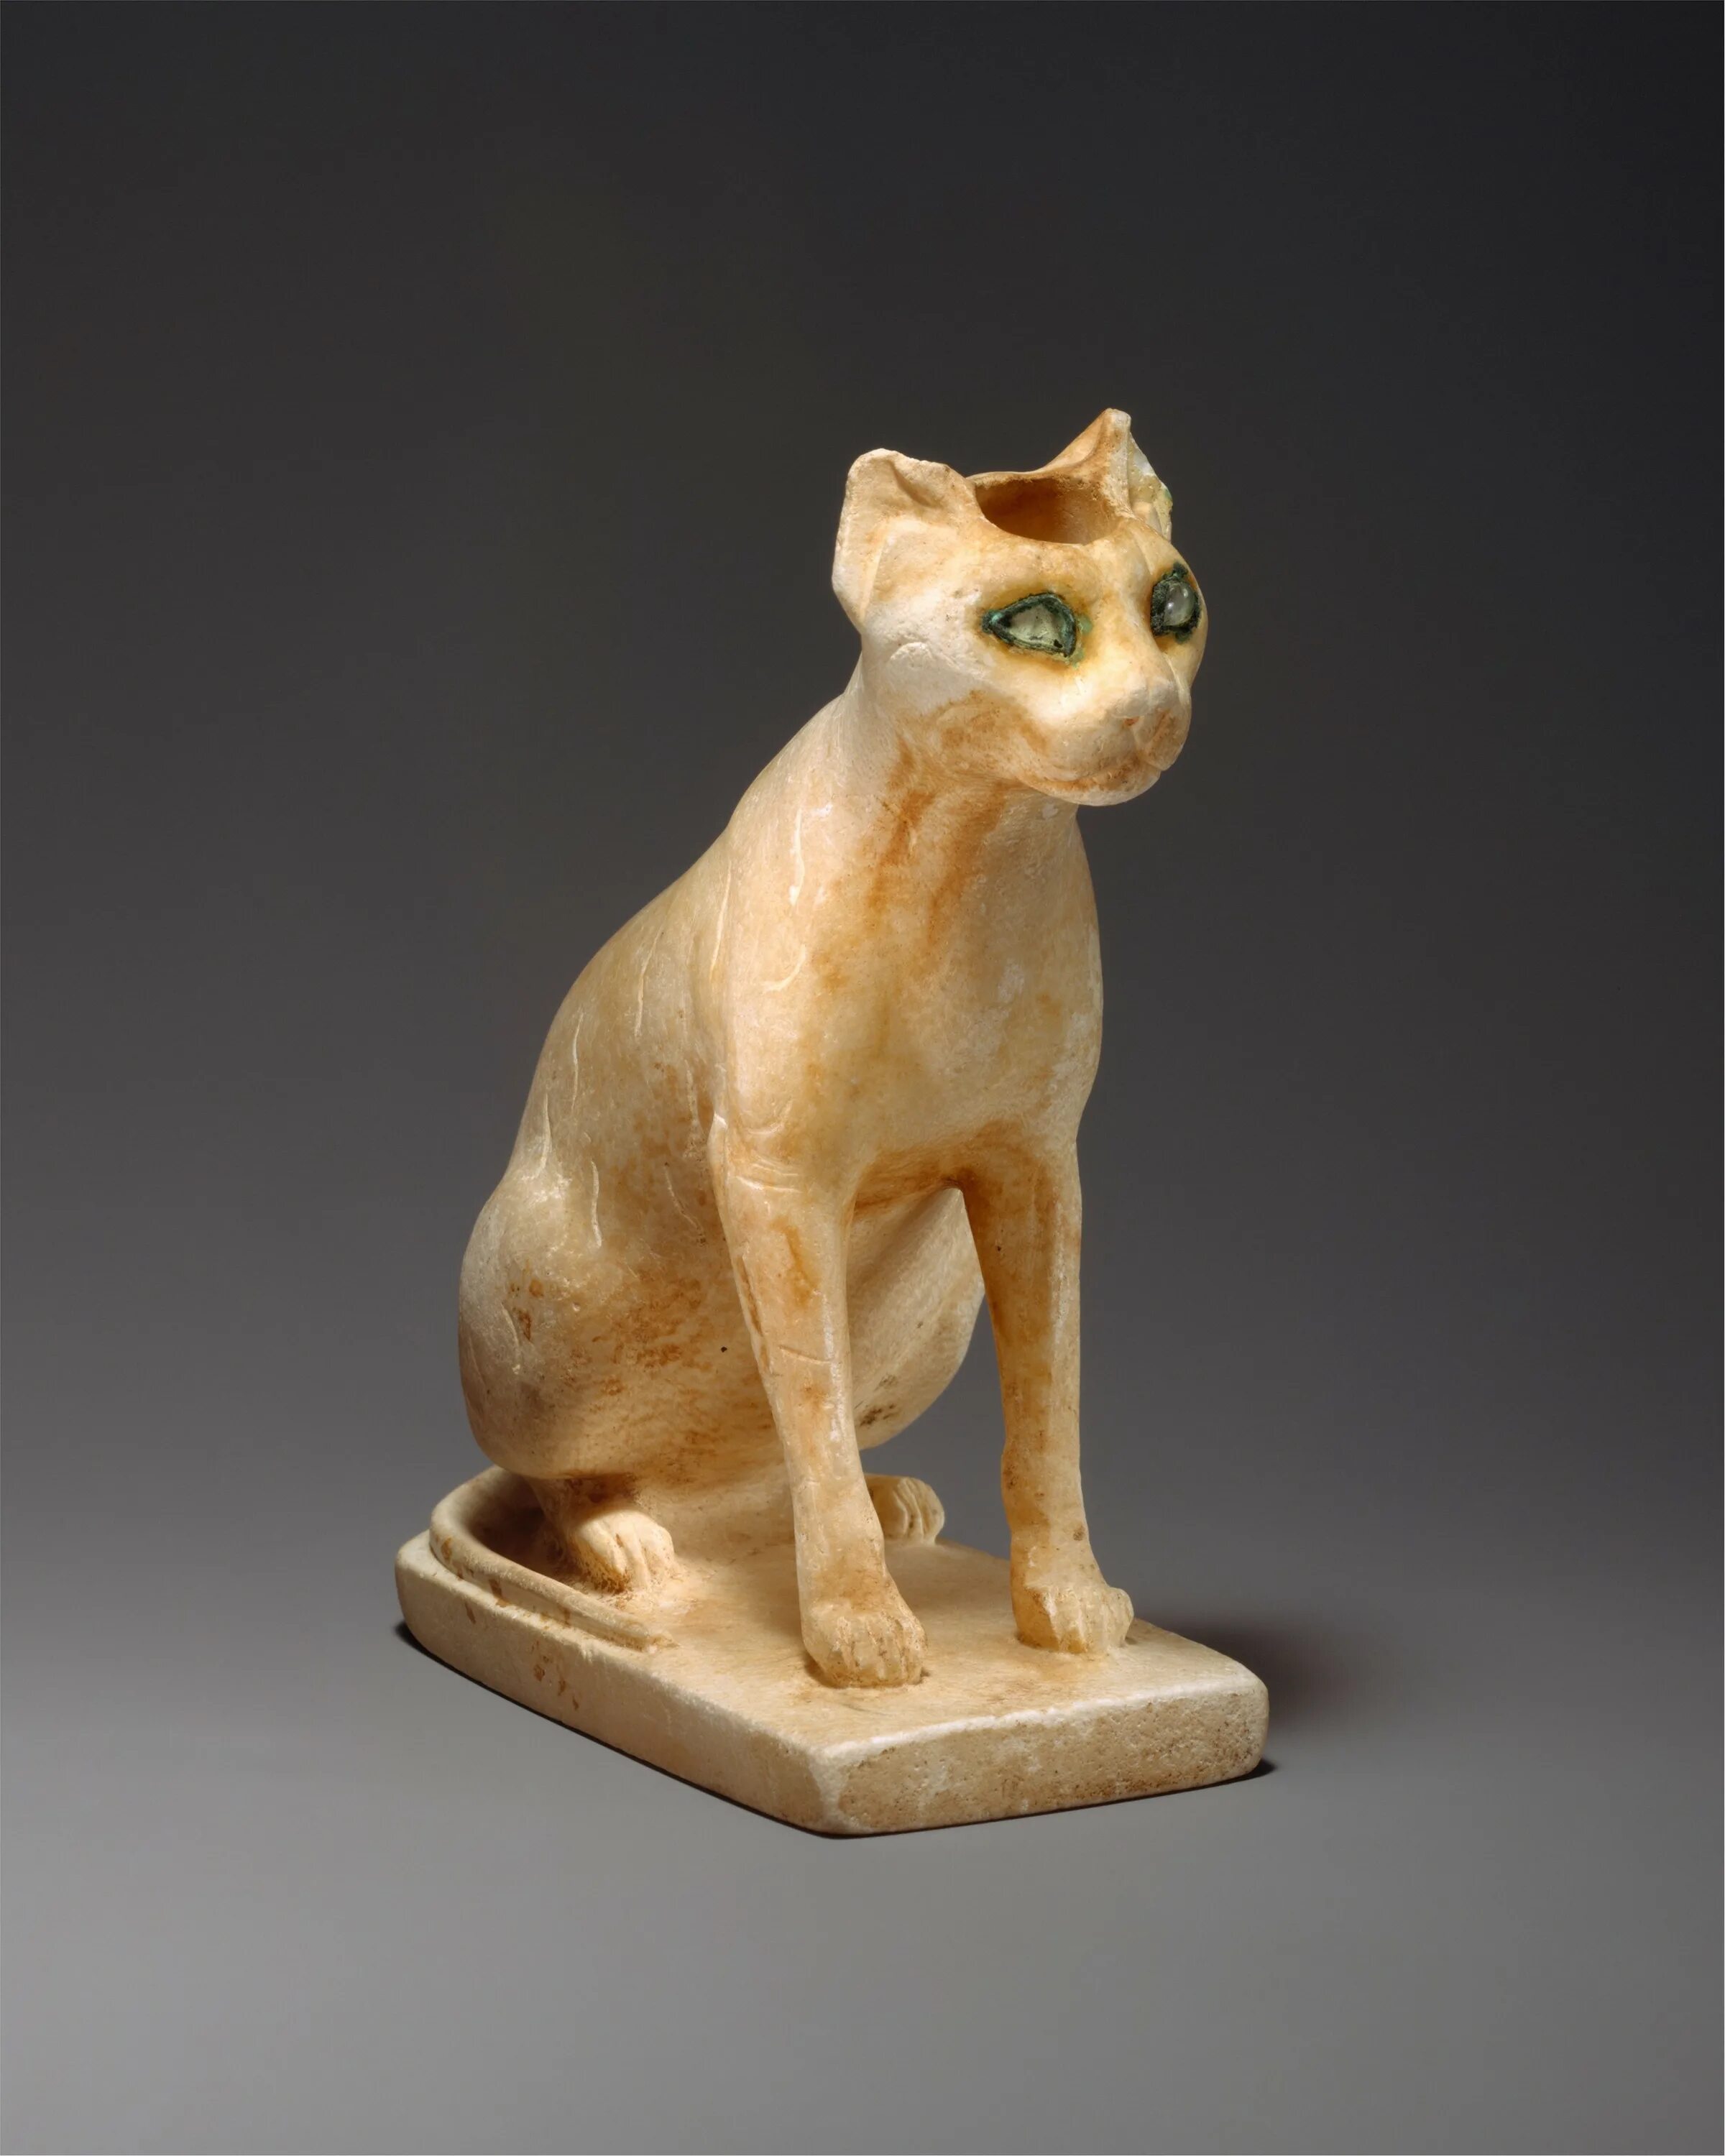 Met cat. Статуэтка кошки. Древнеегипетские статуэтки кошек. Египетская кошка статуэтка. Египетские статуэтки кошек древние.